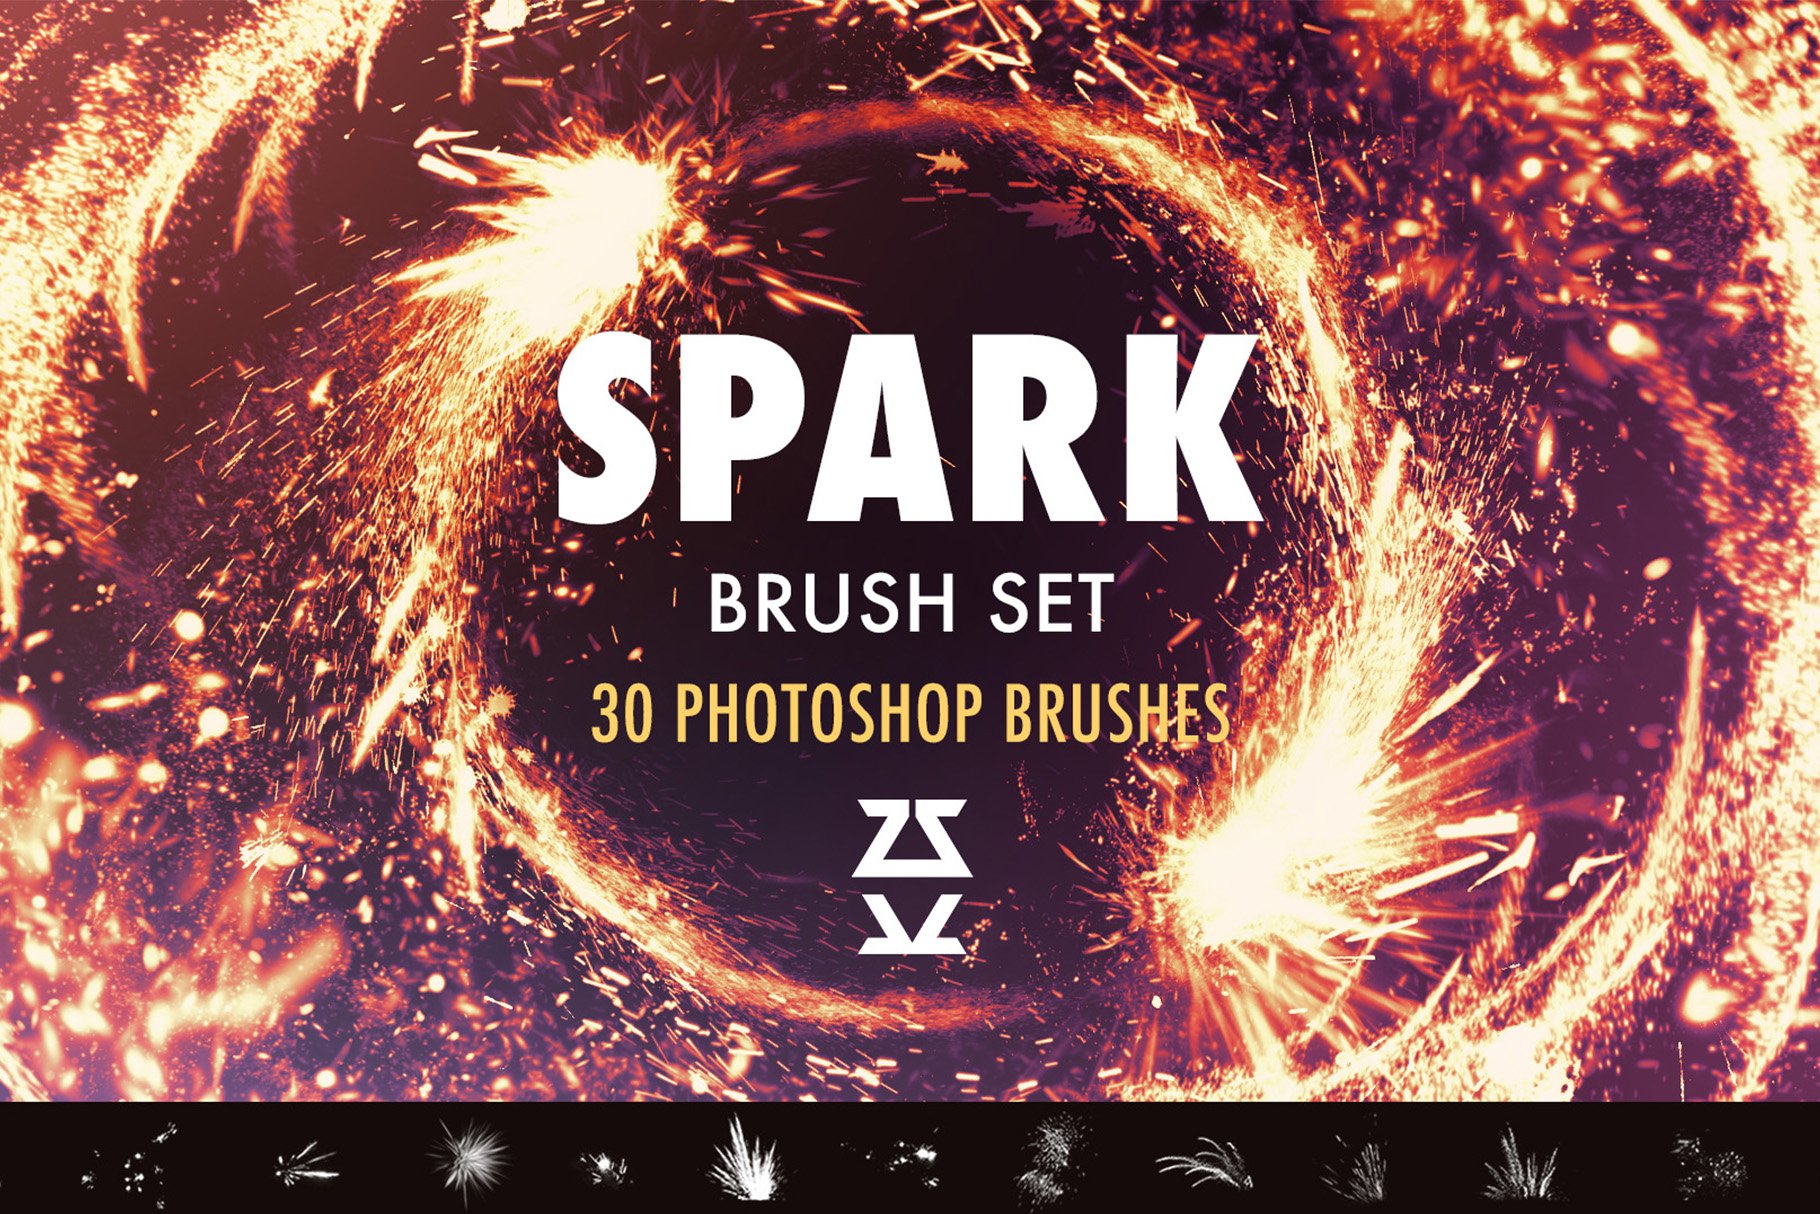 Spark Brush packcover image.